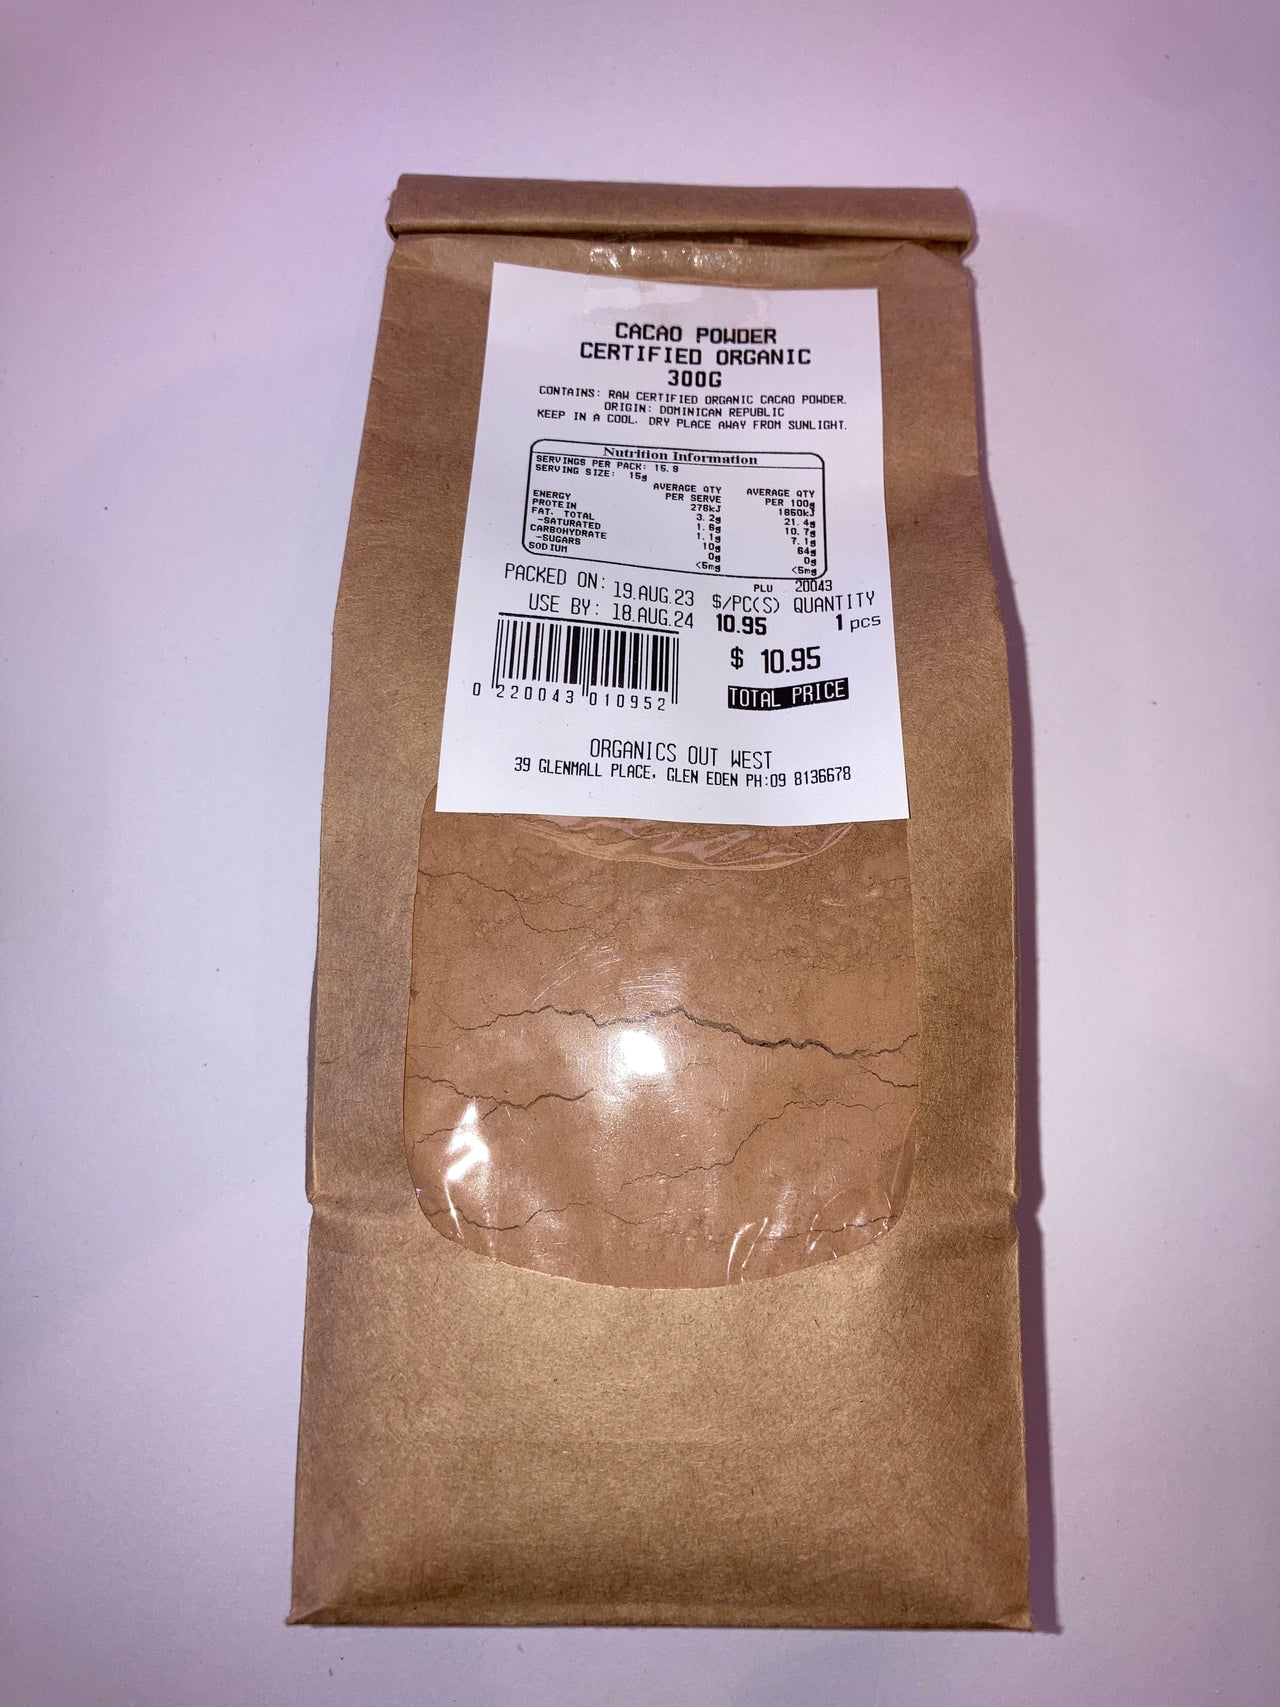 Organics Out West - Organic Cacao Powder - [300g]